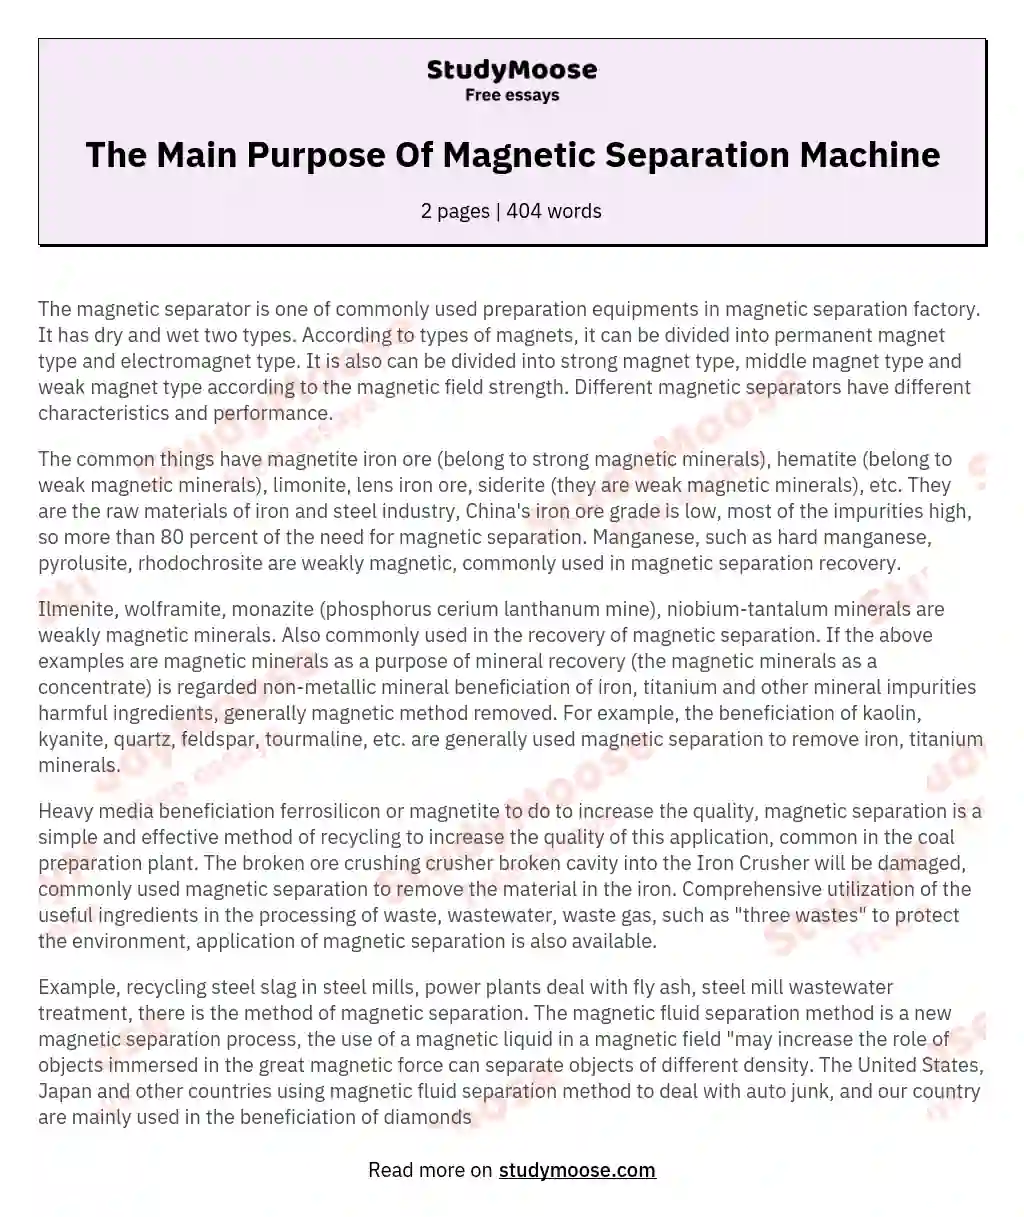 The Main Purpose Of Magnetic Separation Machine essay